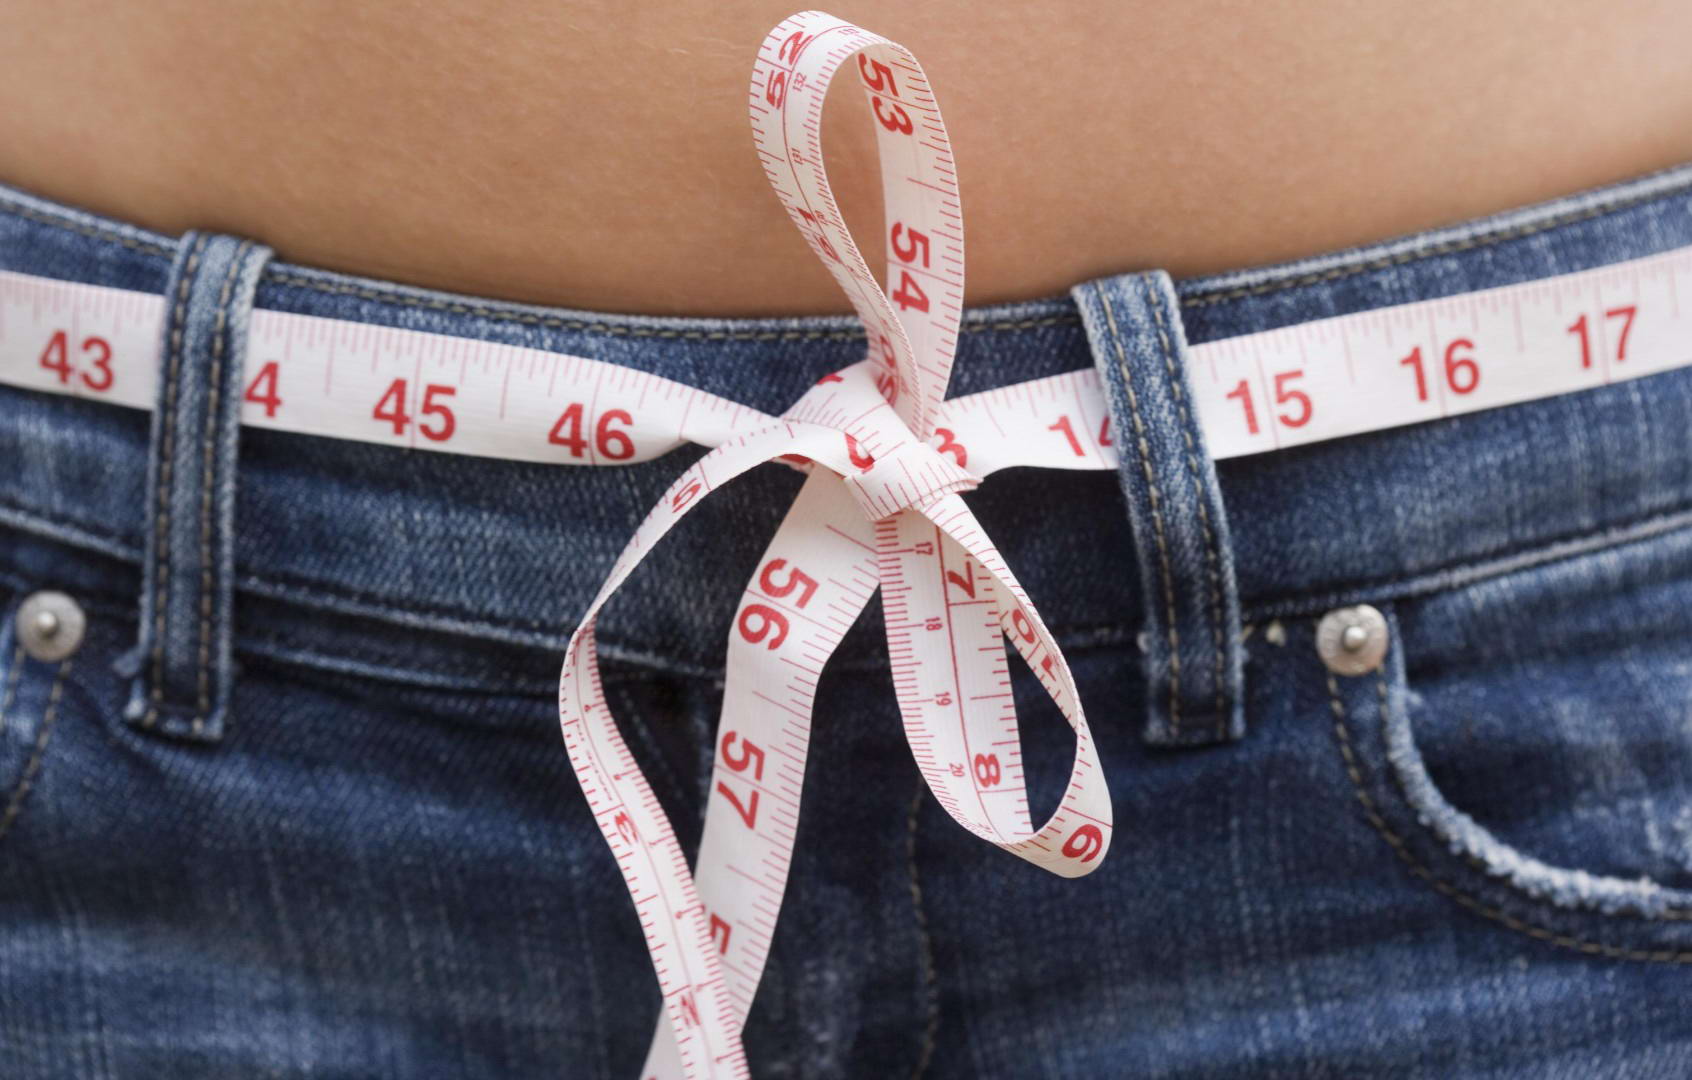 body fat - میزان کالری مورد نیاز روزانه ؛ چه مقدار کالری در روز باید مصرف کنیم؟